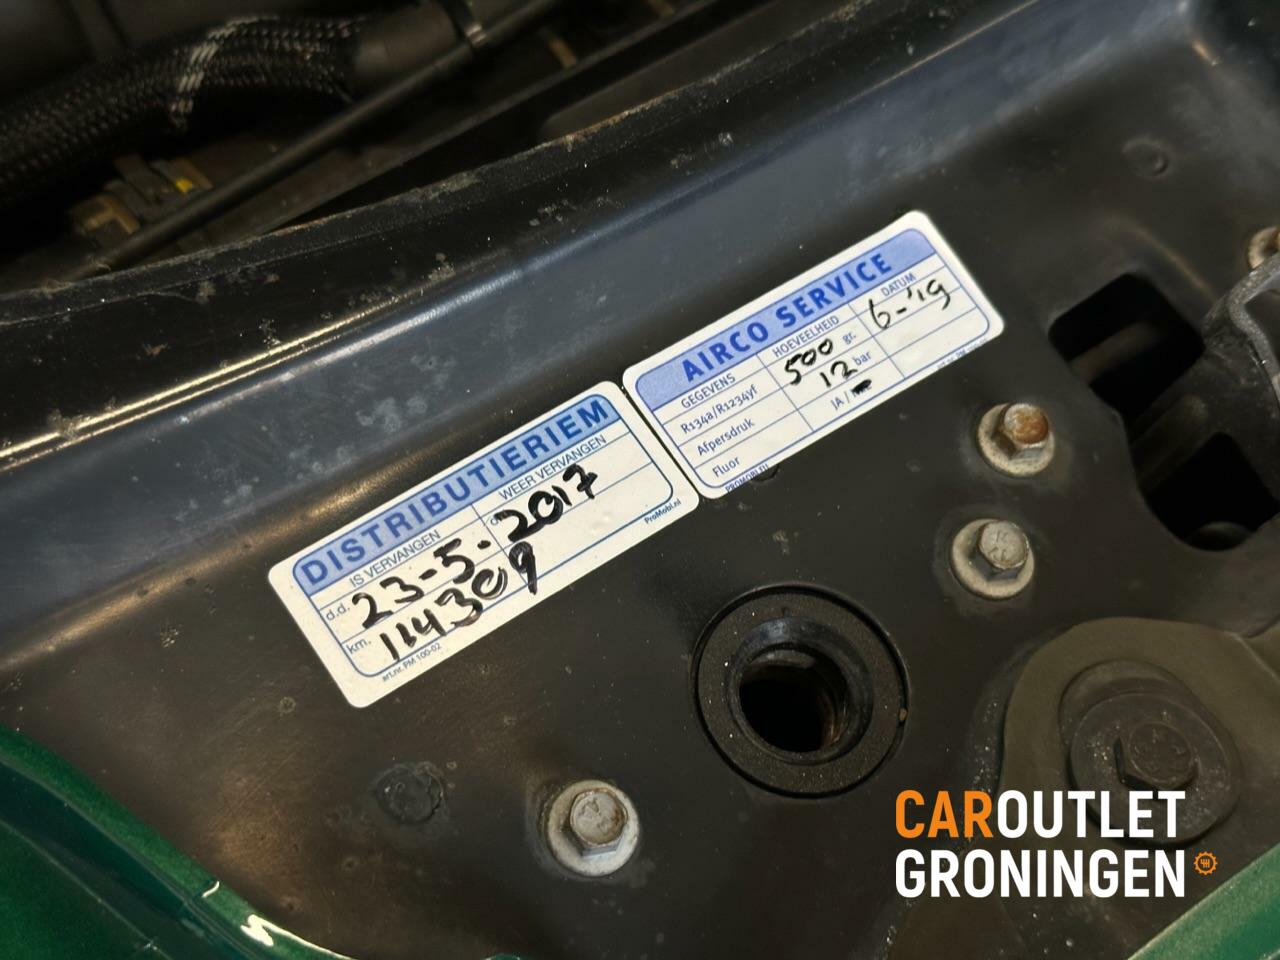 Caroutlet Groningen - MG ZT-T 2.5 V6 190 | YOUNGTIMER | AIRCO | CRUISE | DB-RIEM VV